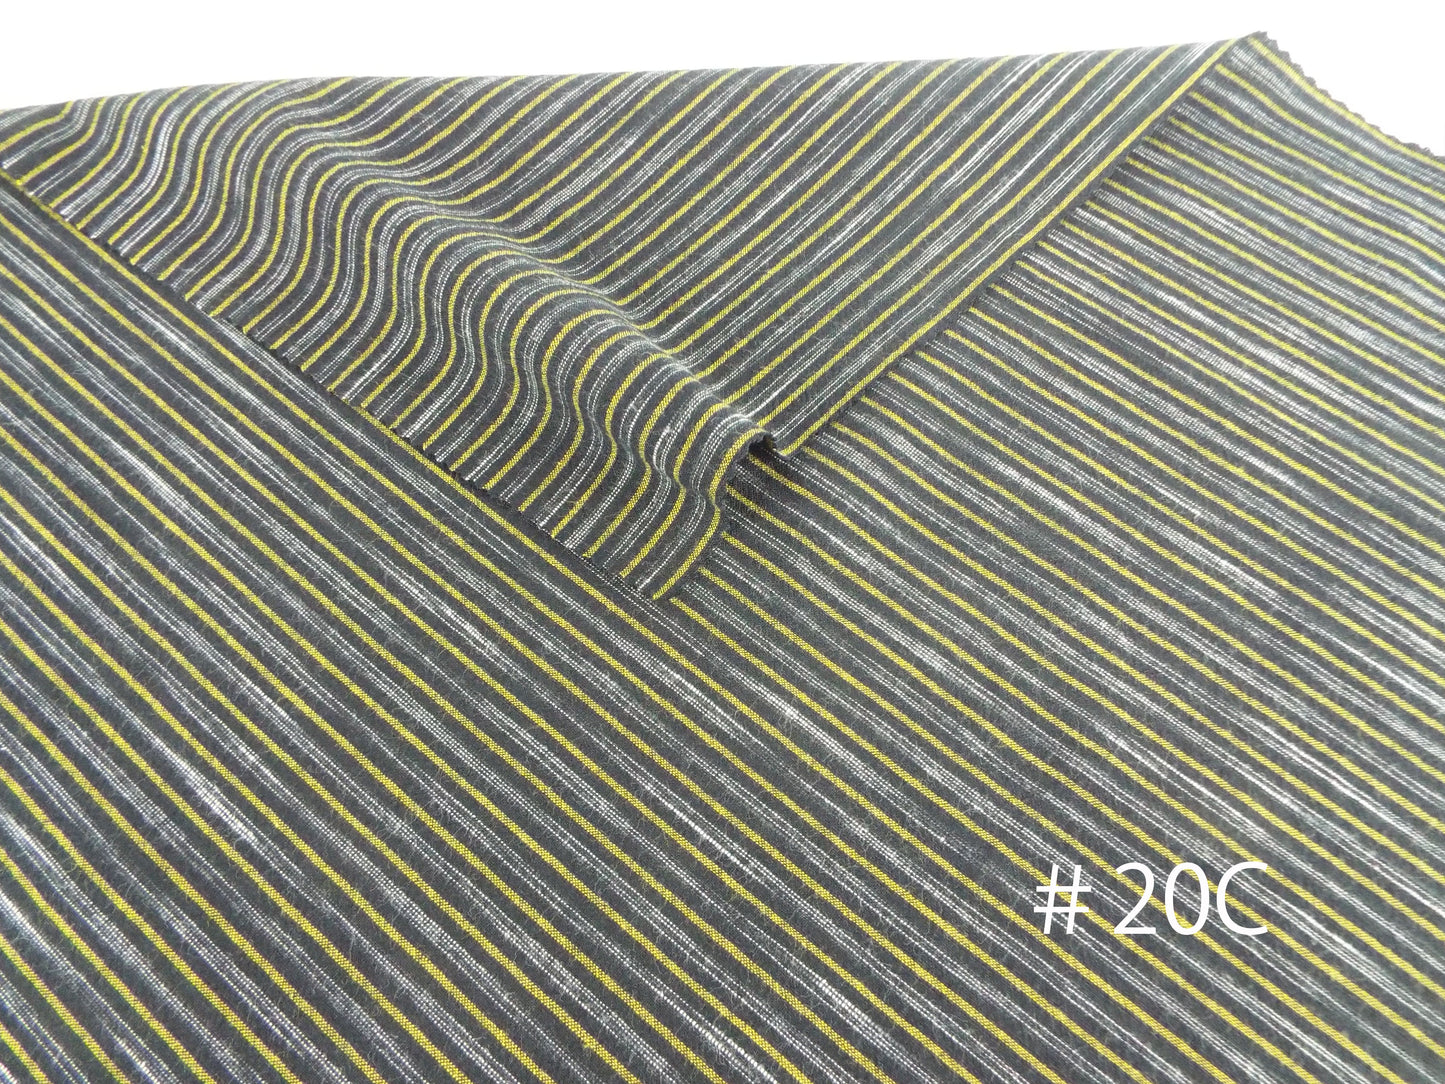 Kameda striped cotton fabric ordinary ground # 20 ABC 3 patterns